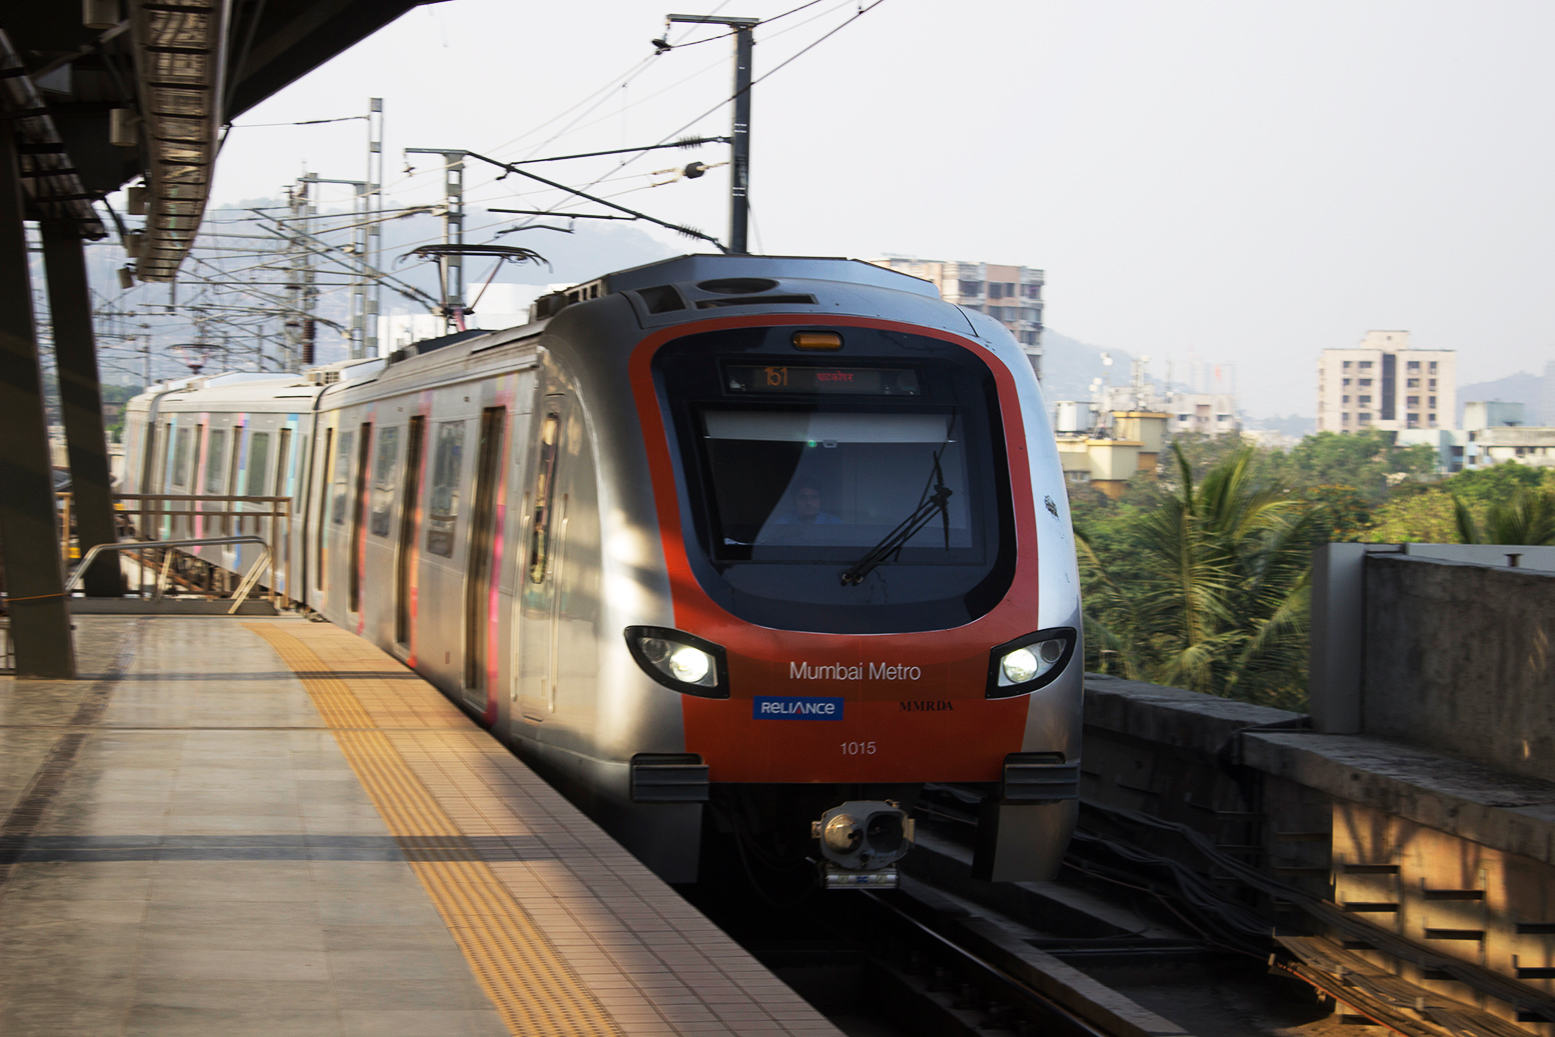 Mumbai Metro Train arriving